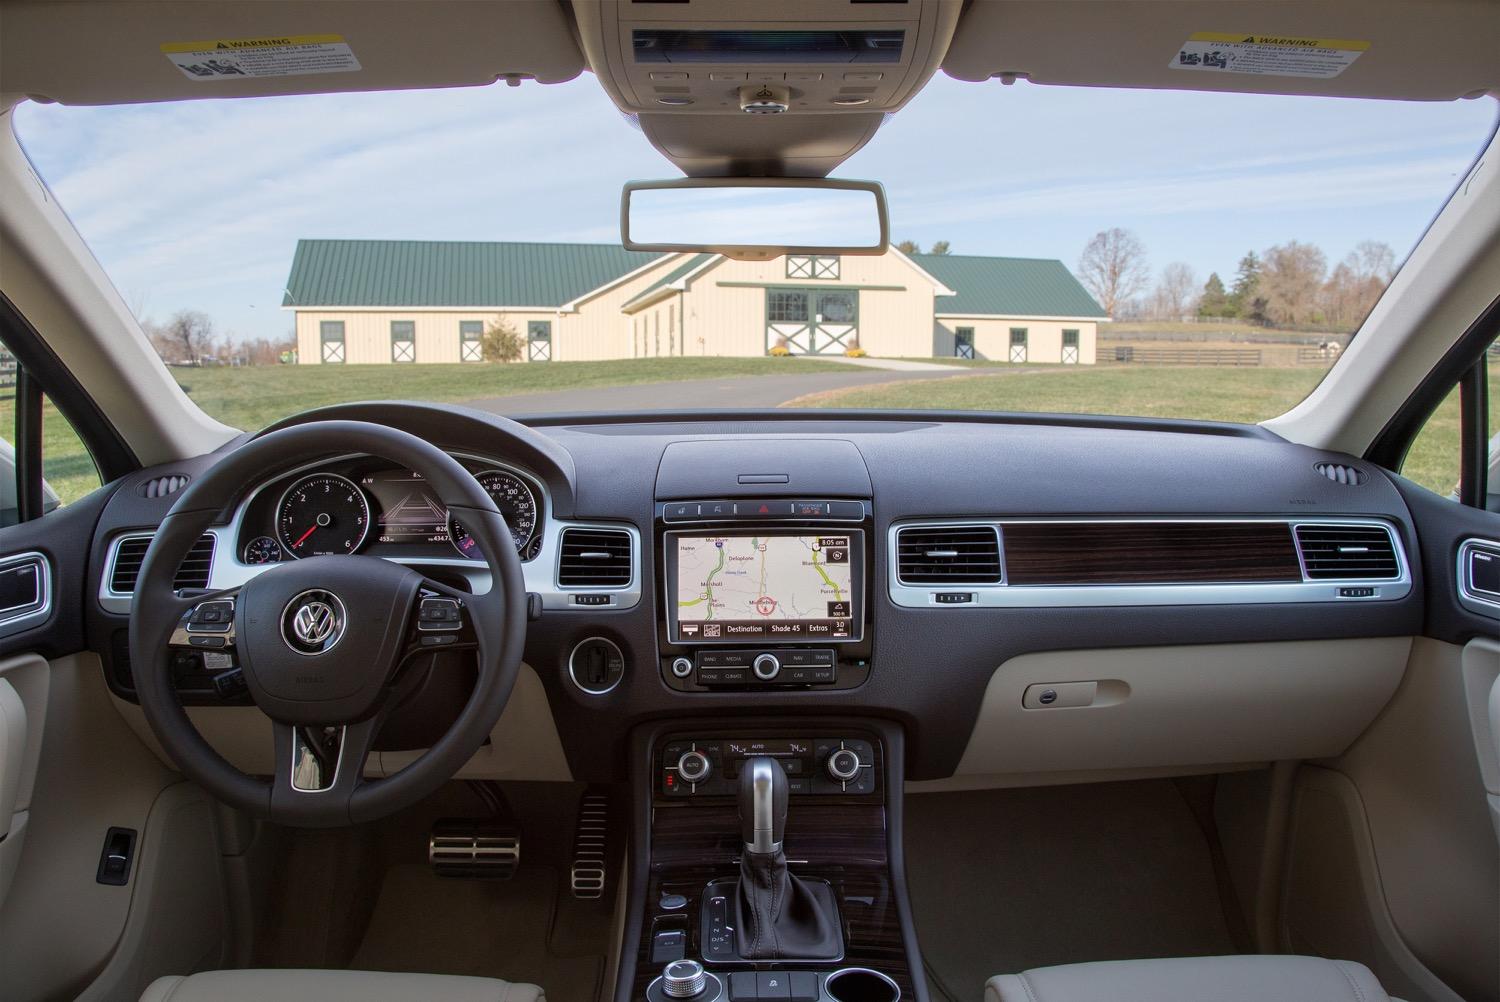 2015 Volkswagen Touareg